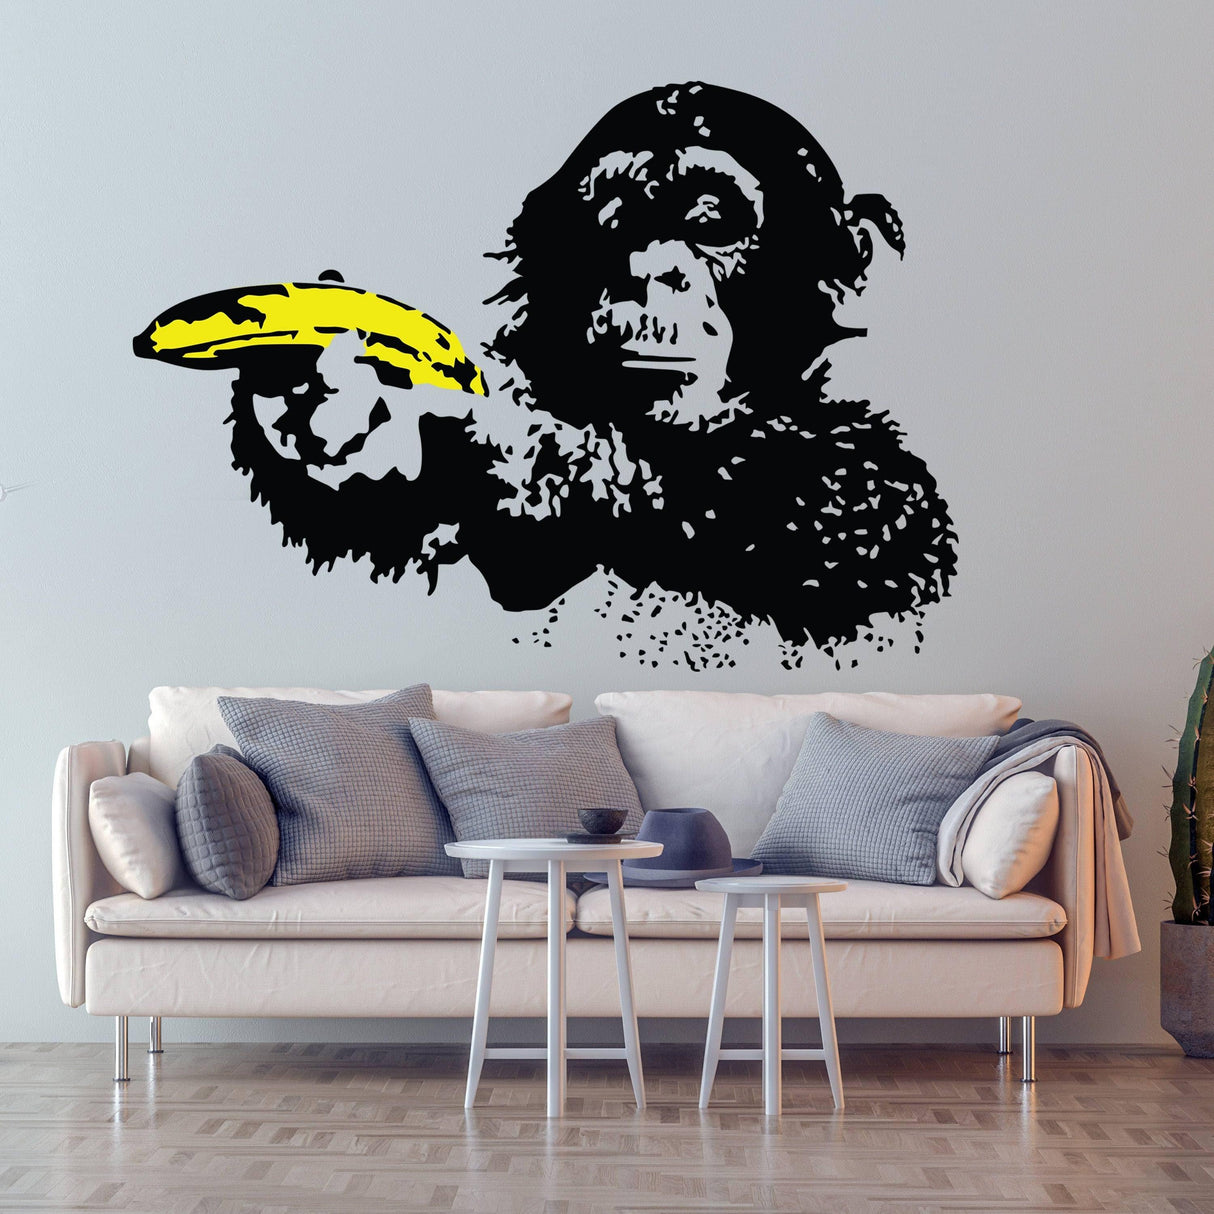 Banksy Monkey Wall Sticker - Bansky Art Vinyl Decal - Street Graffiti Focus Chimp Mural - Decords